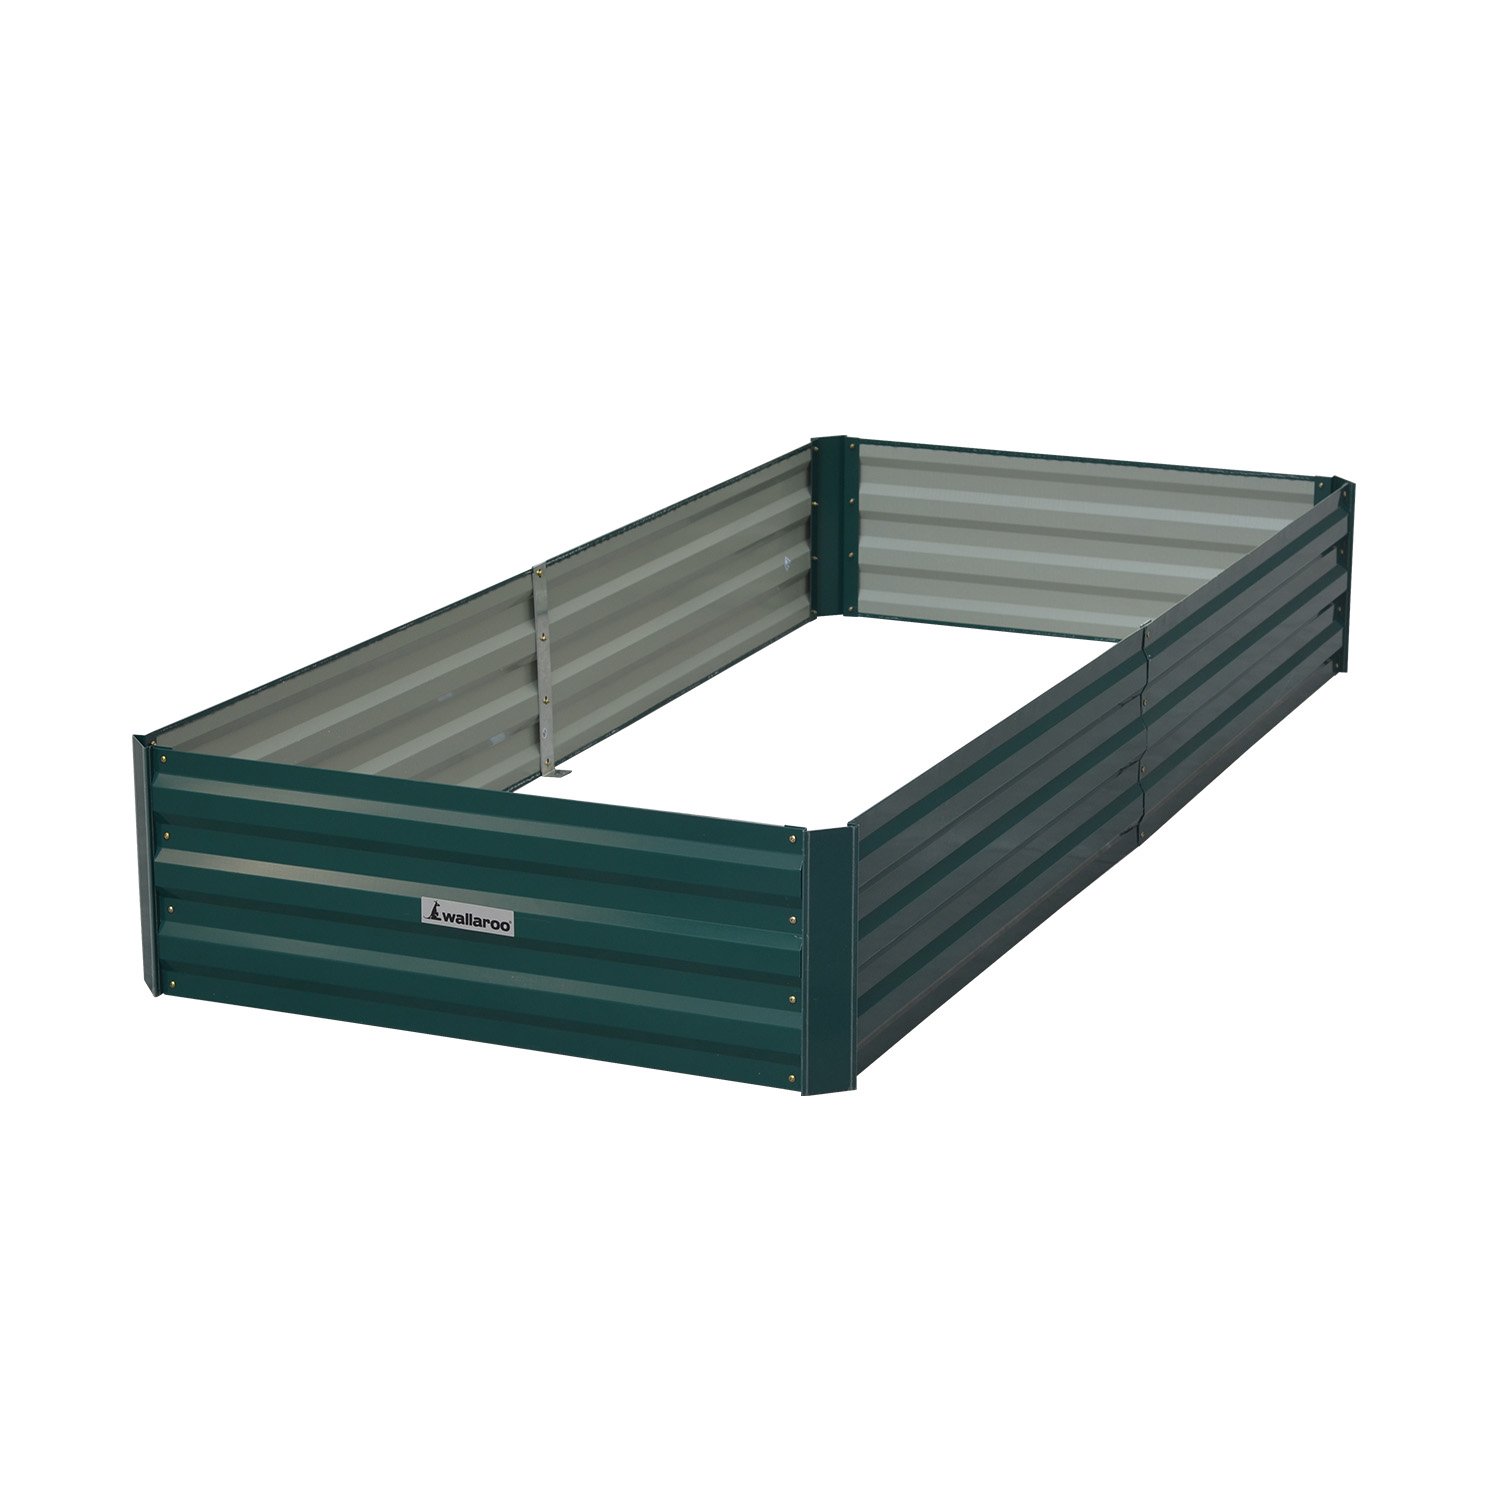 Wallaroo Garden Bed 210 x 90 x 30cm Galvanized Steel - Green 2